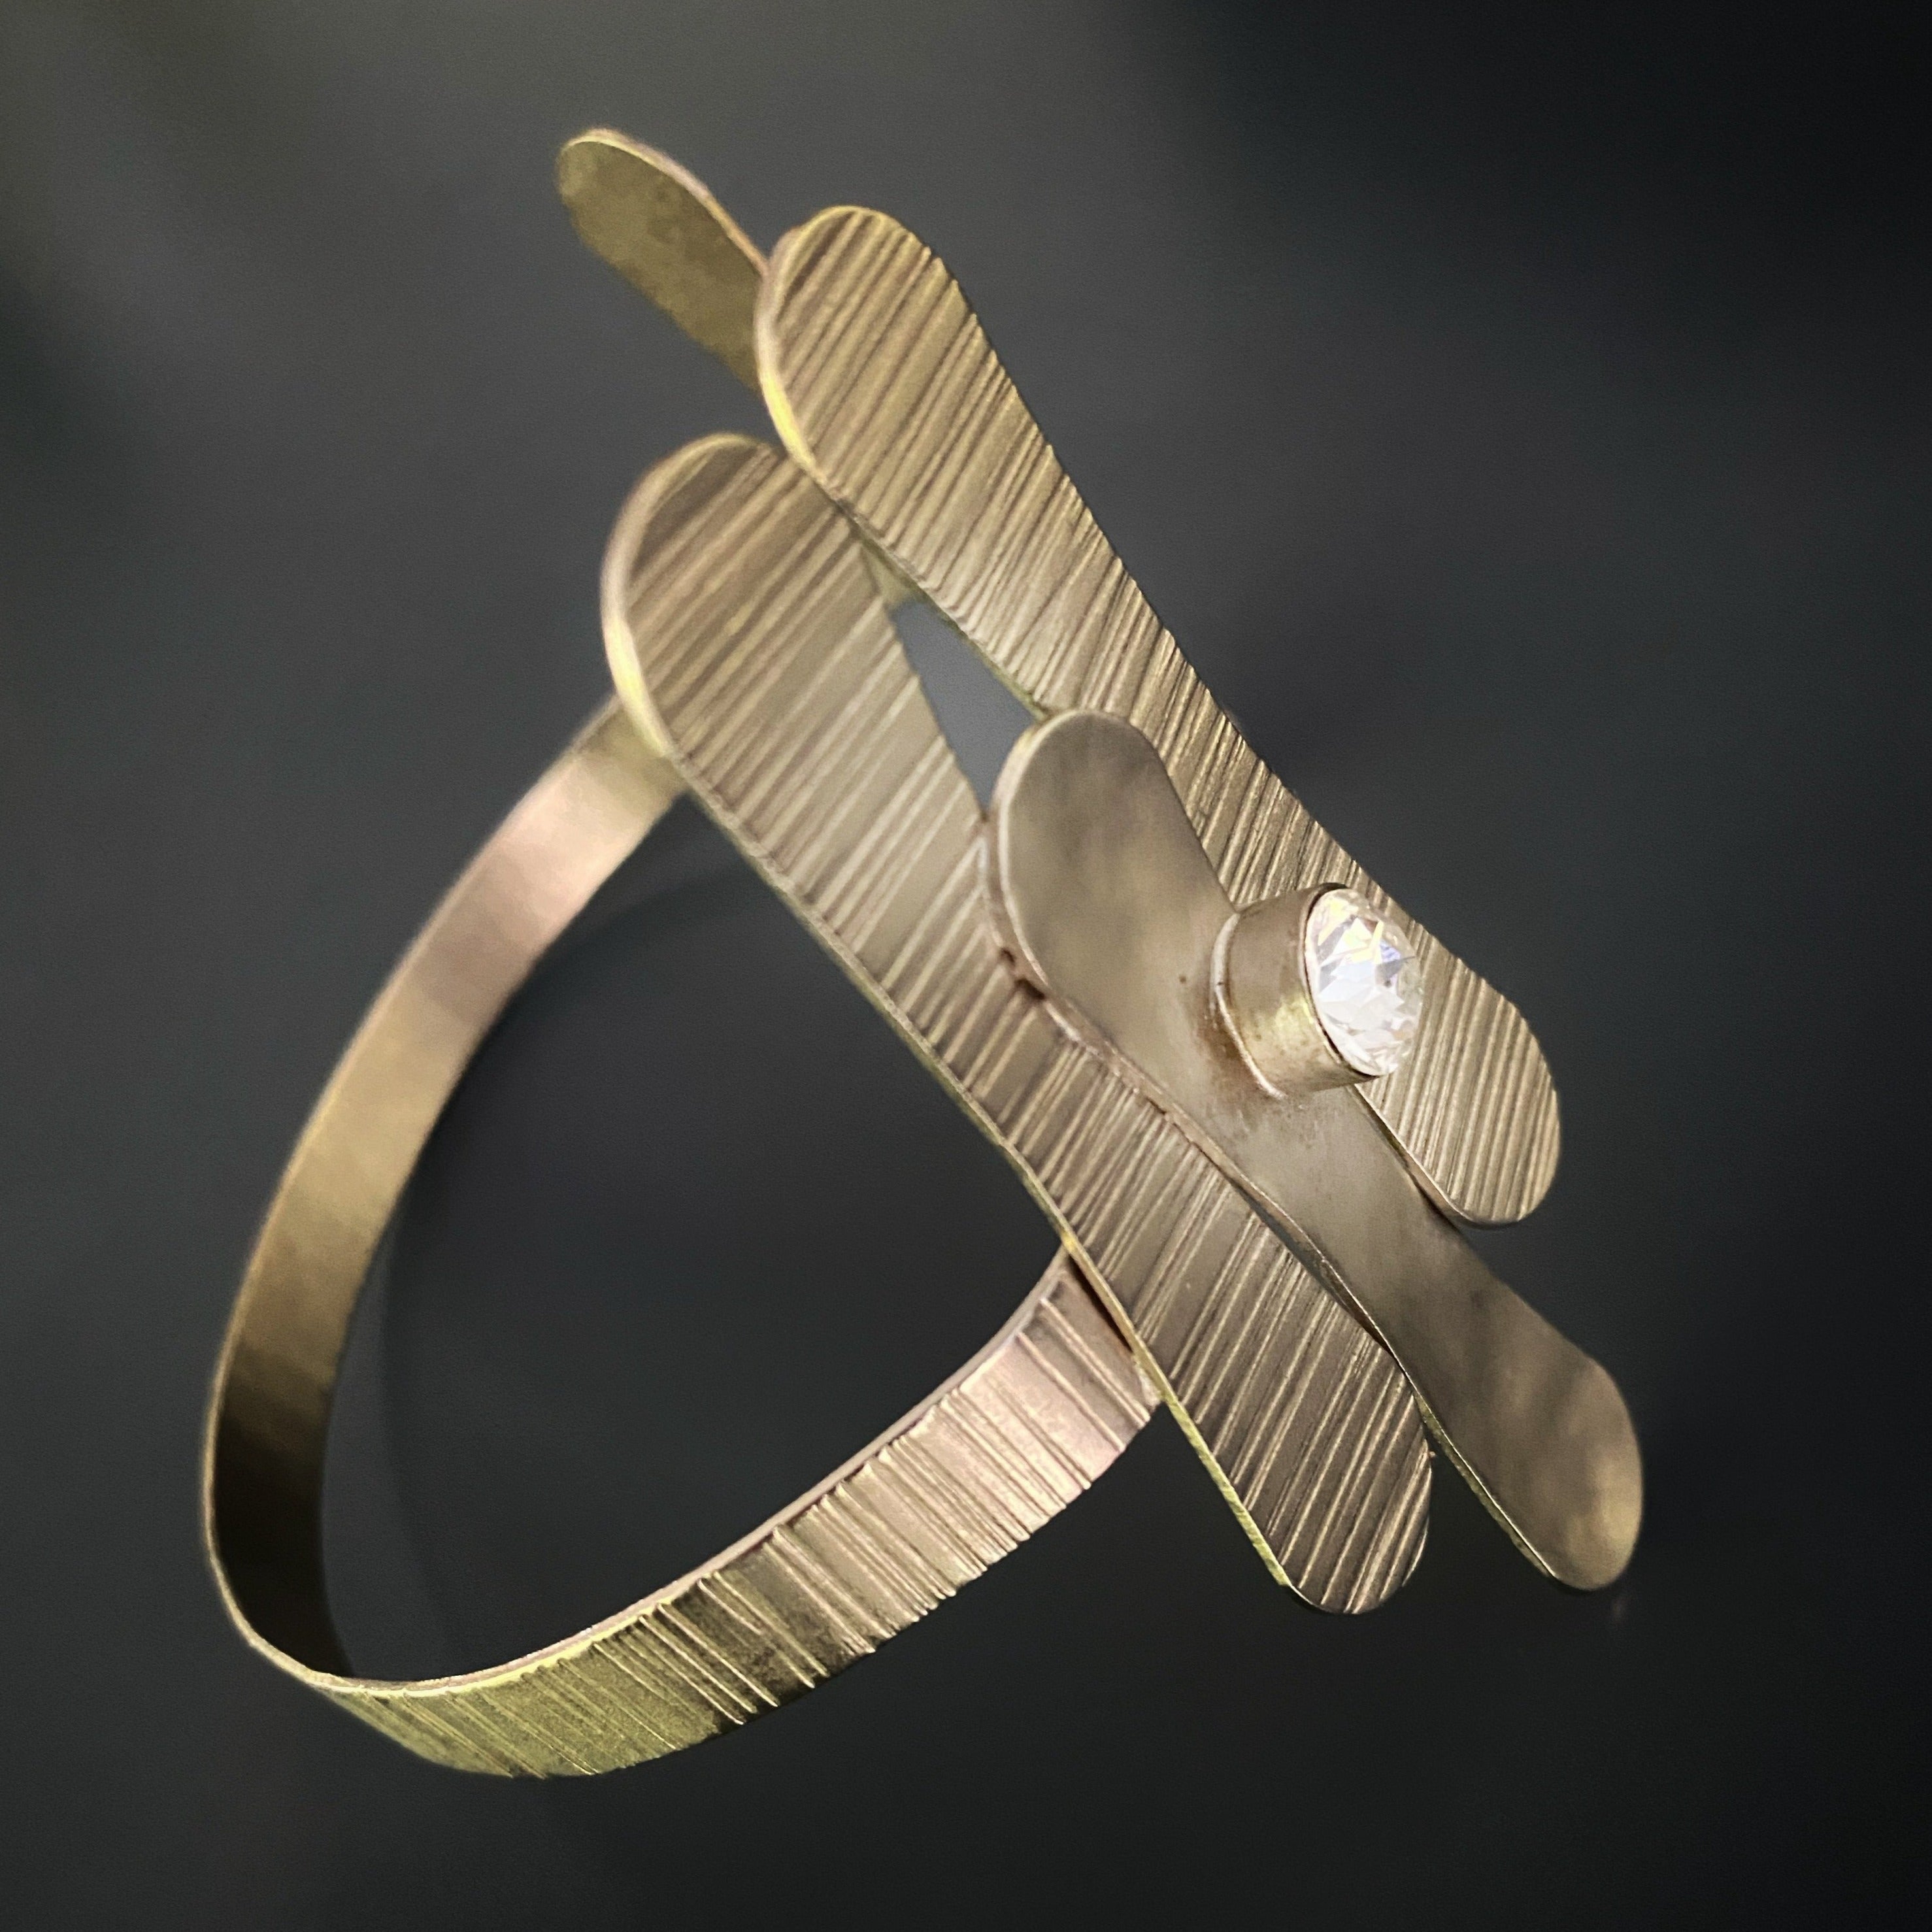 Simple yet striking Silver Upper Arm Cuff Bracelet design